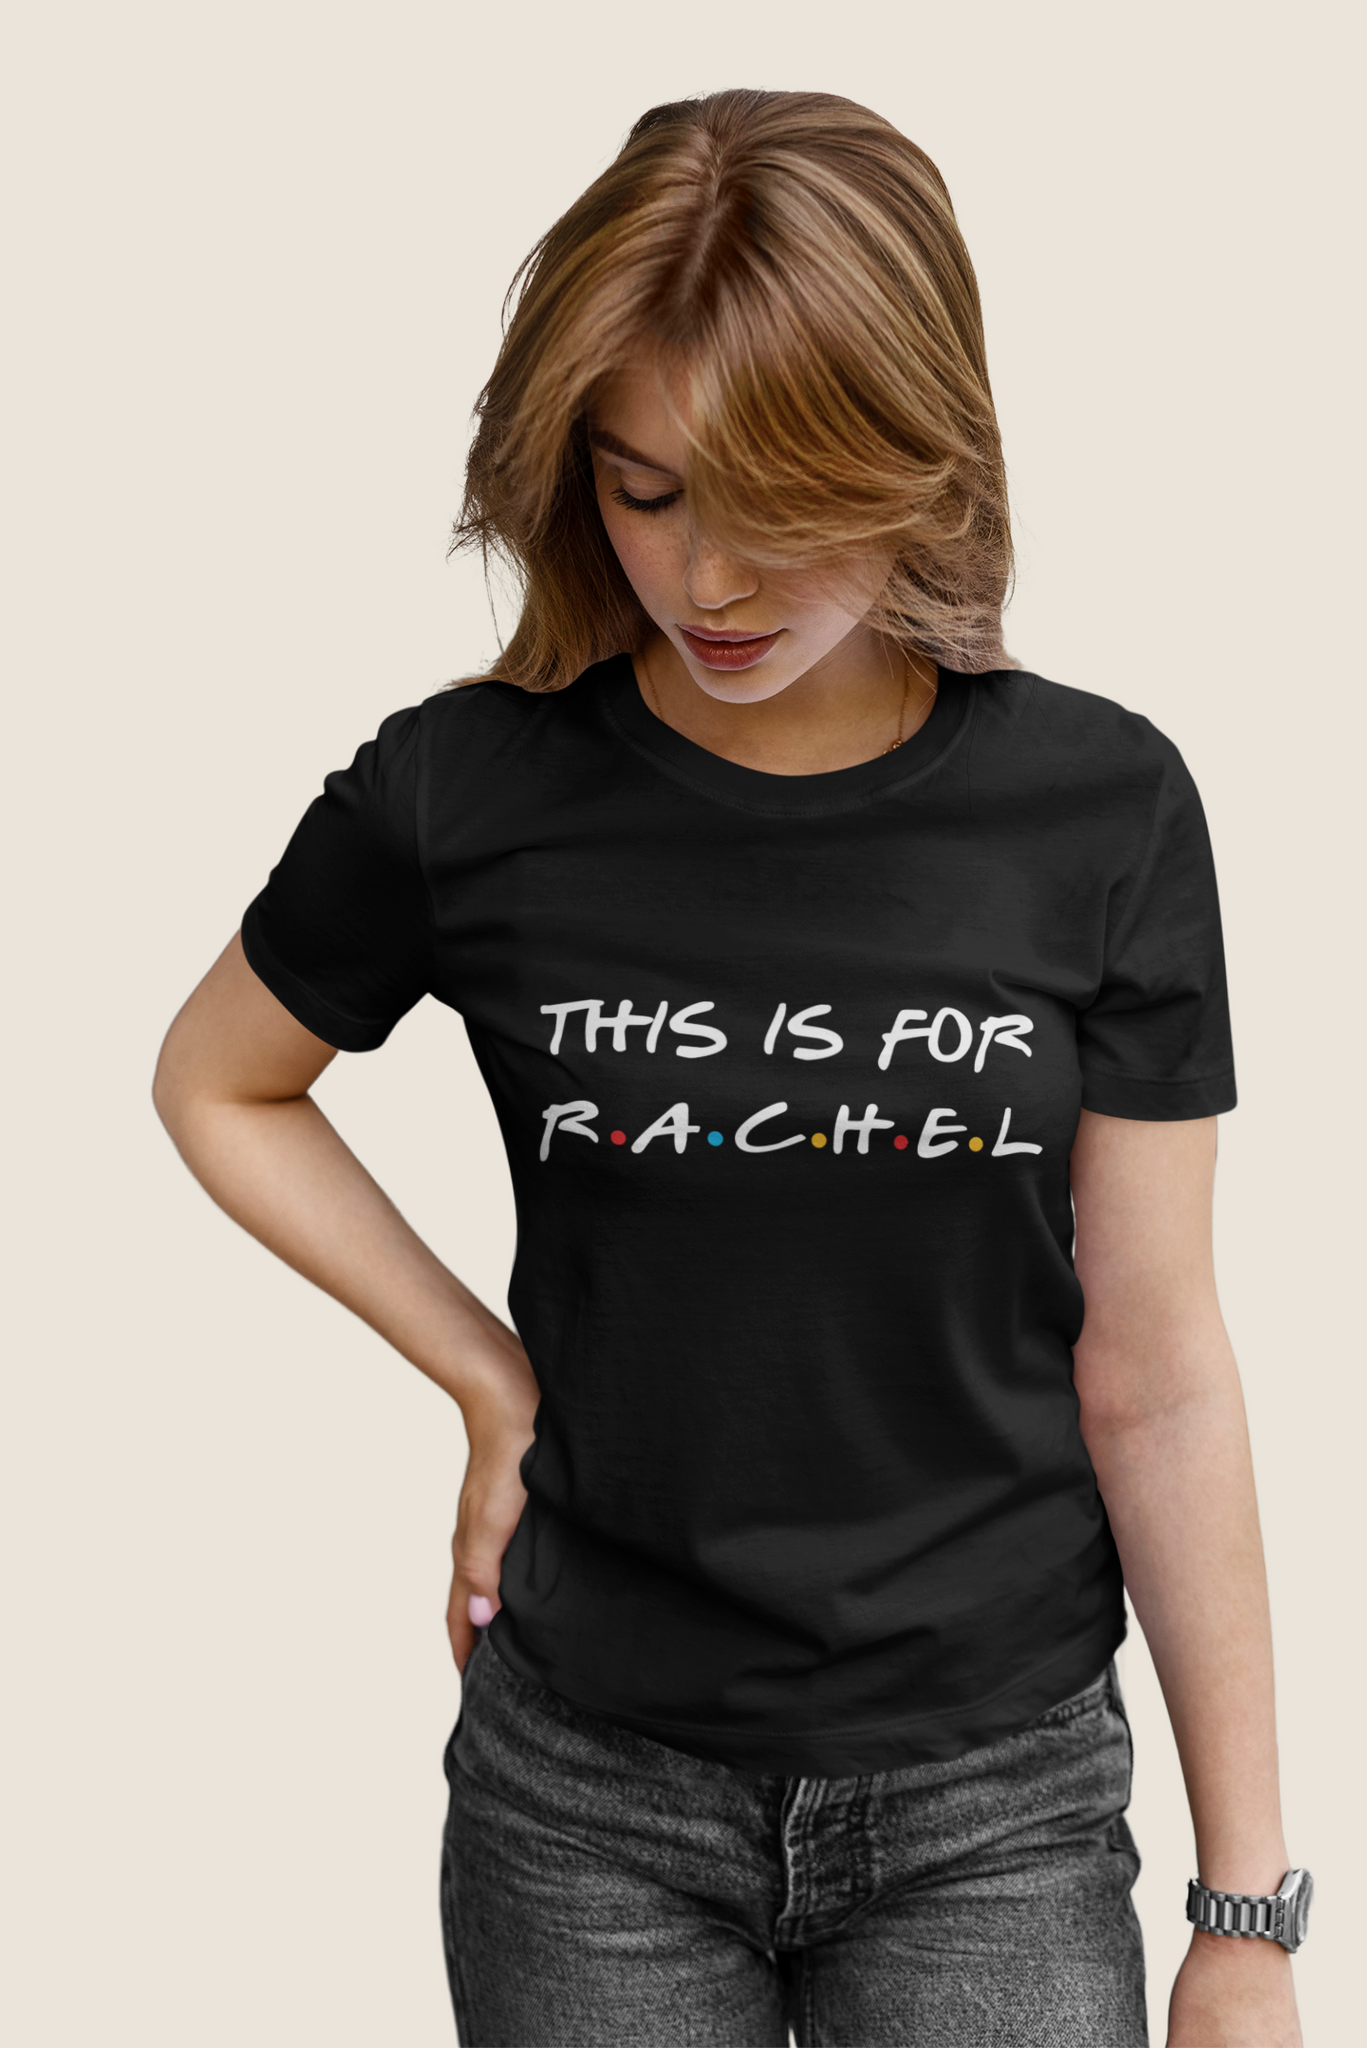 Friends TV Show T Shirt, Rachel T Shirt, This Is For Rachel Tshirt